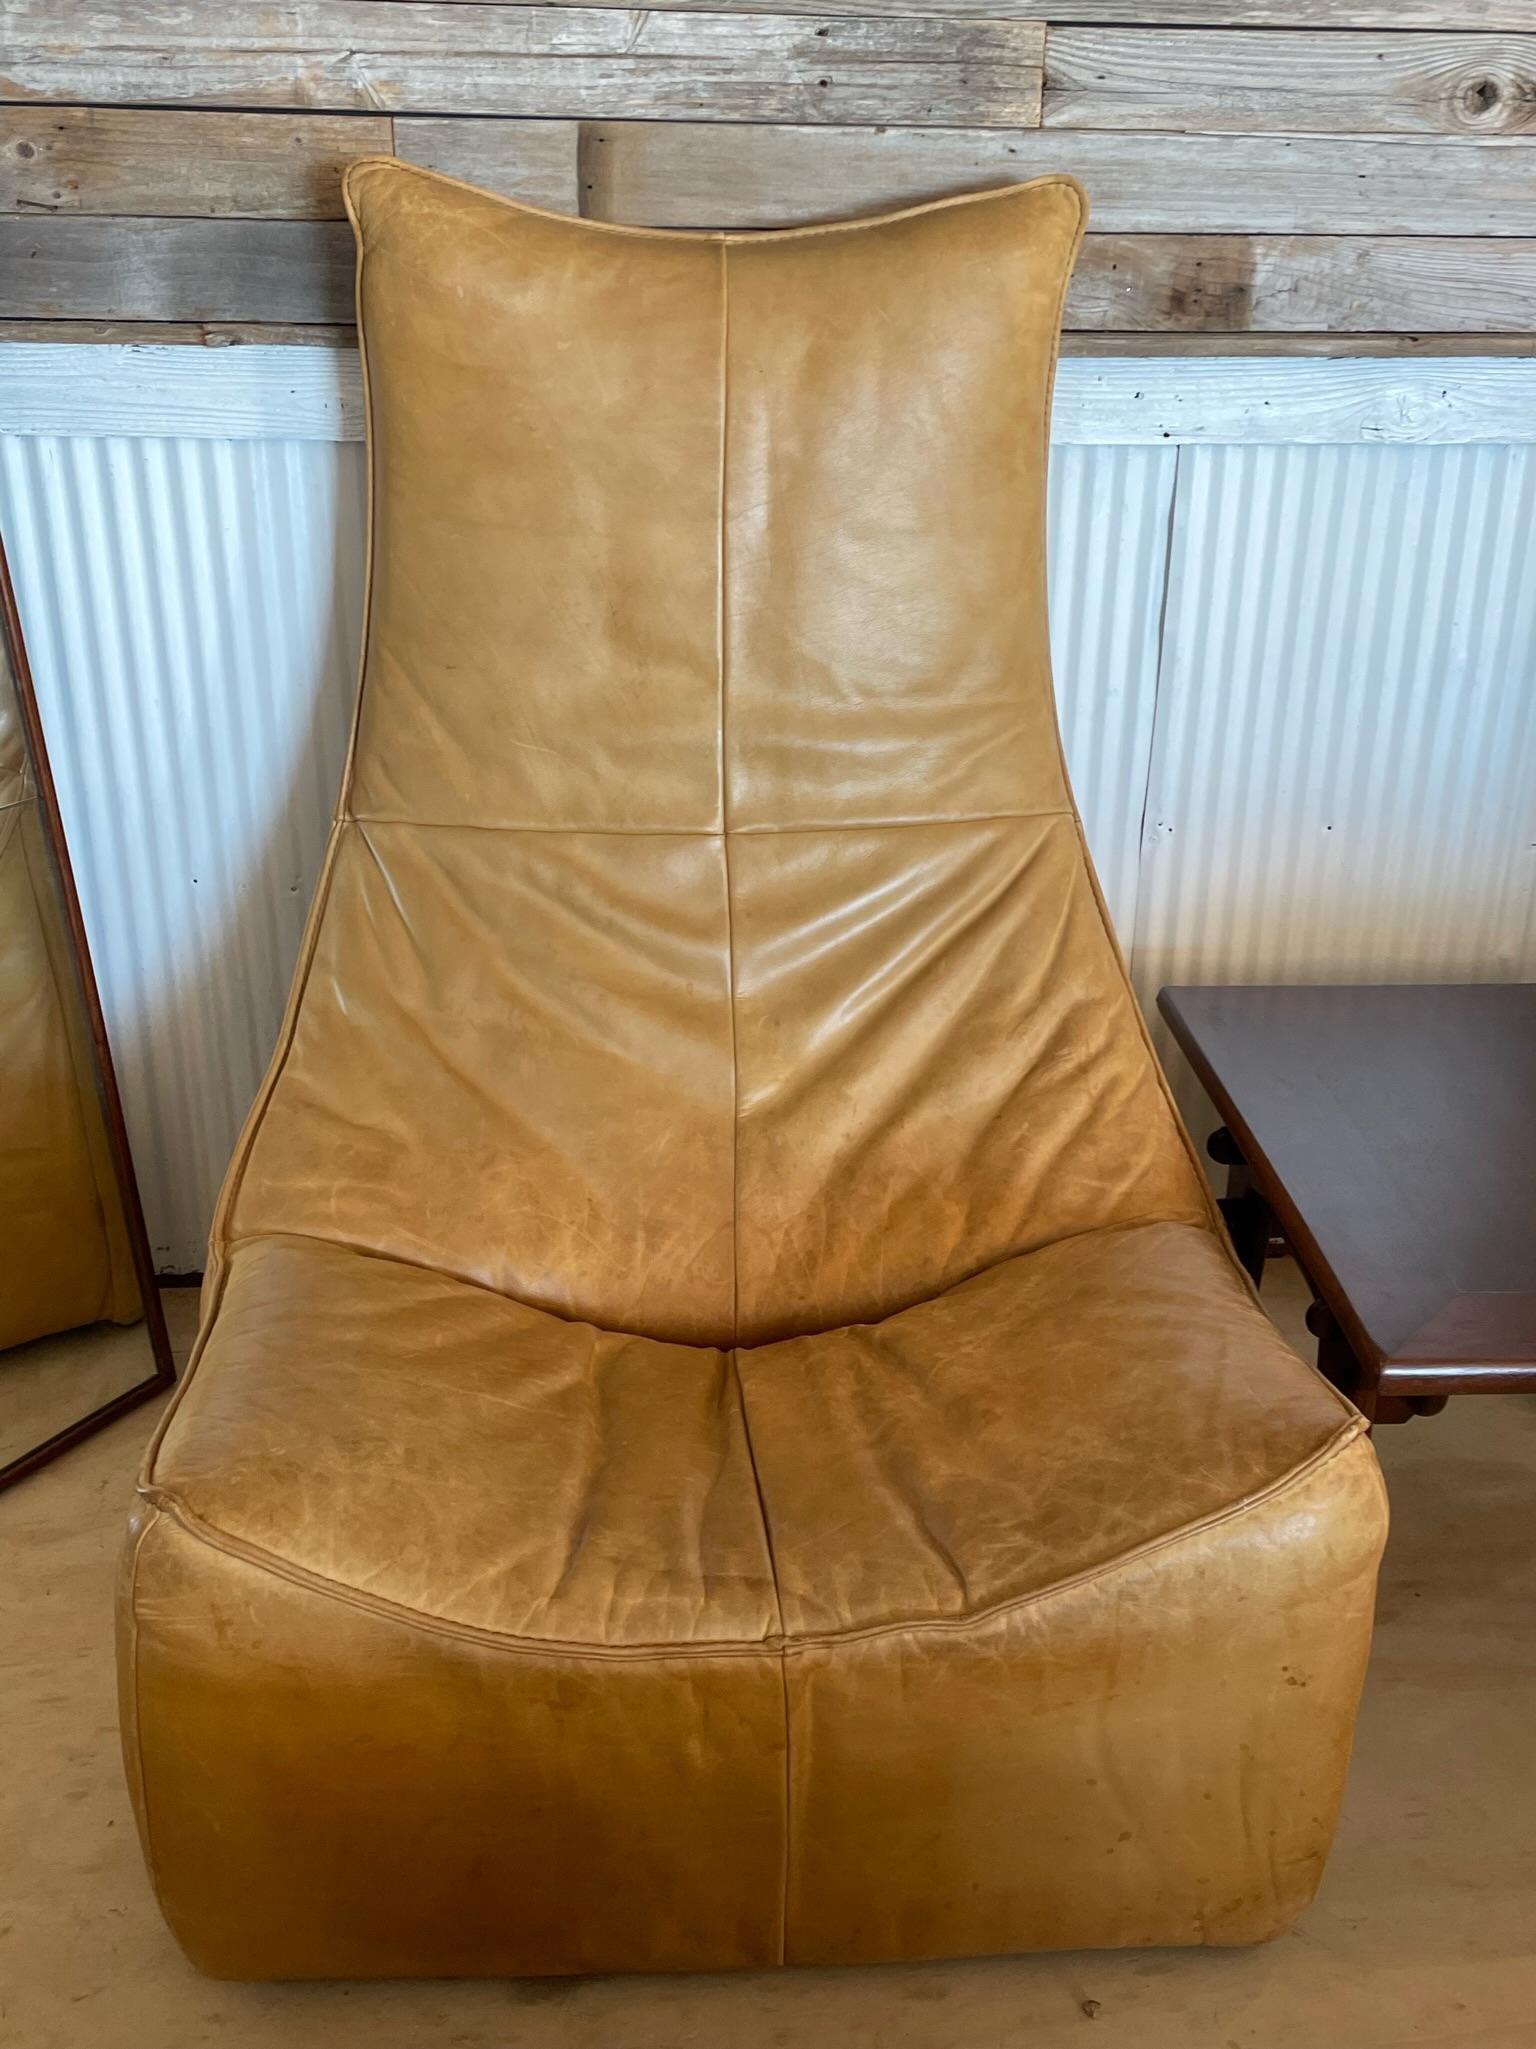 gerard banana chair